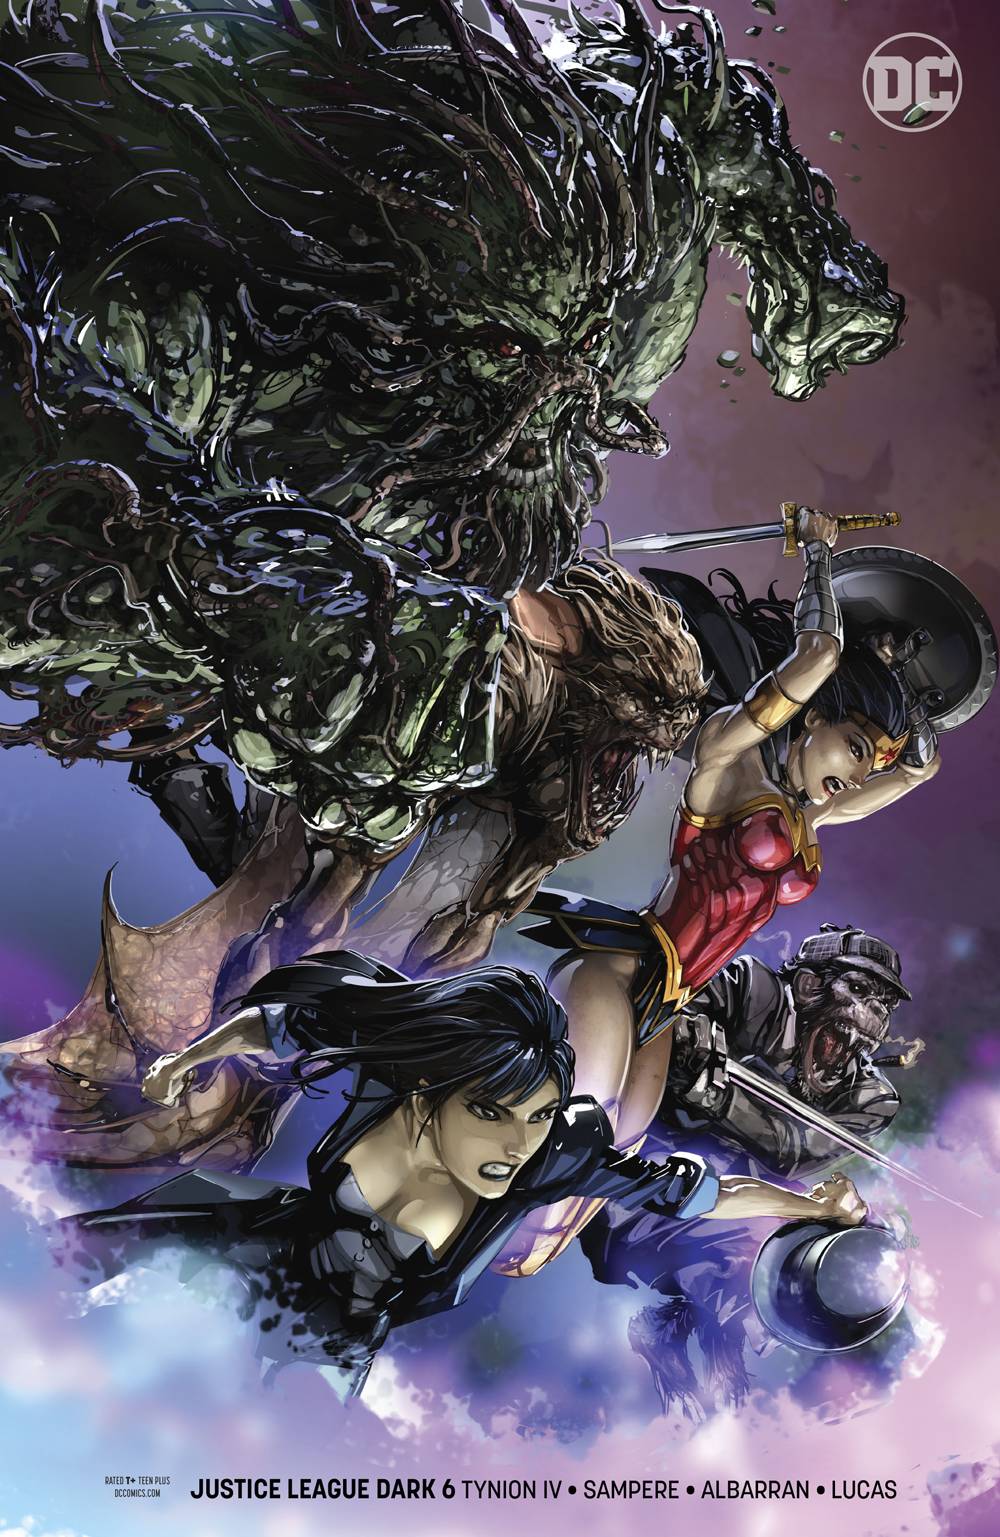 Justice League Dark #6 Variant Edition (Crain) [2018]